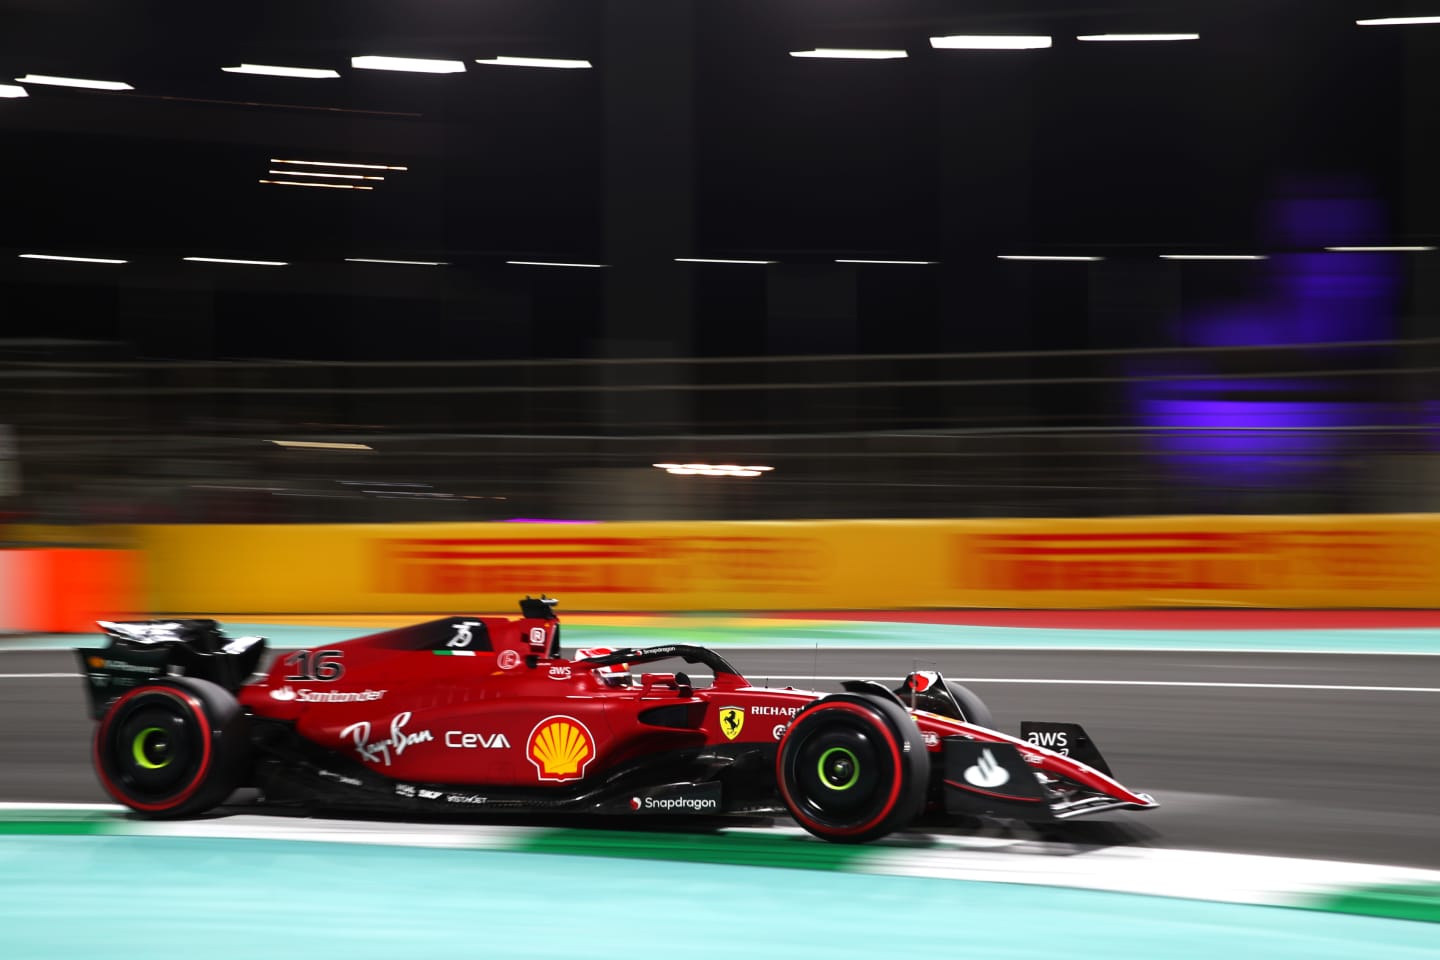 JEDDAH, SAUDI ARABIA - MARCH 25: Charles Leclerc of Monaco driving (16) the Ferrari F1-75 on track